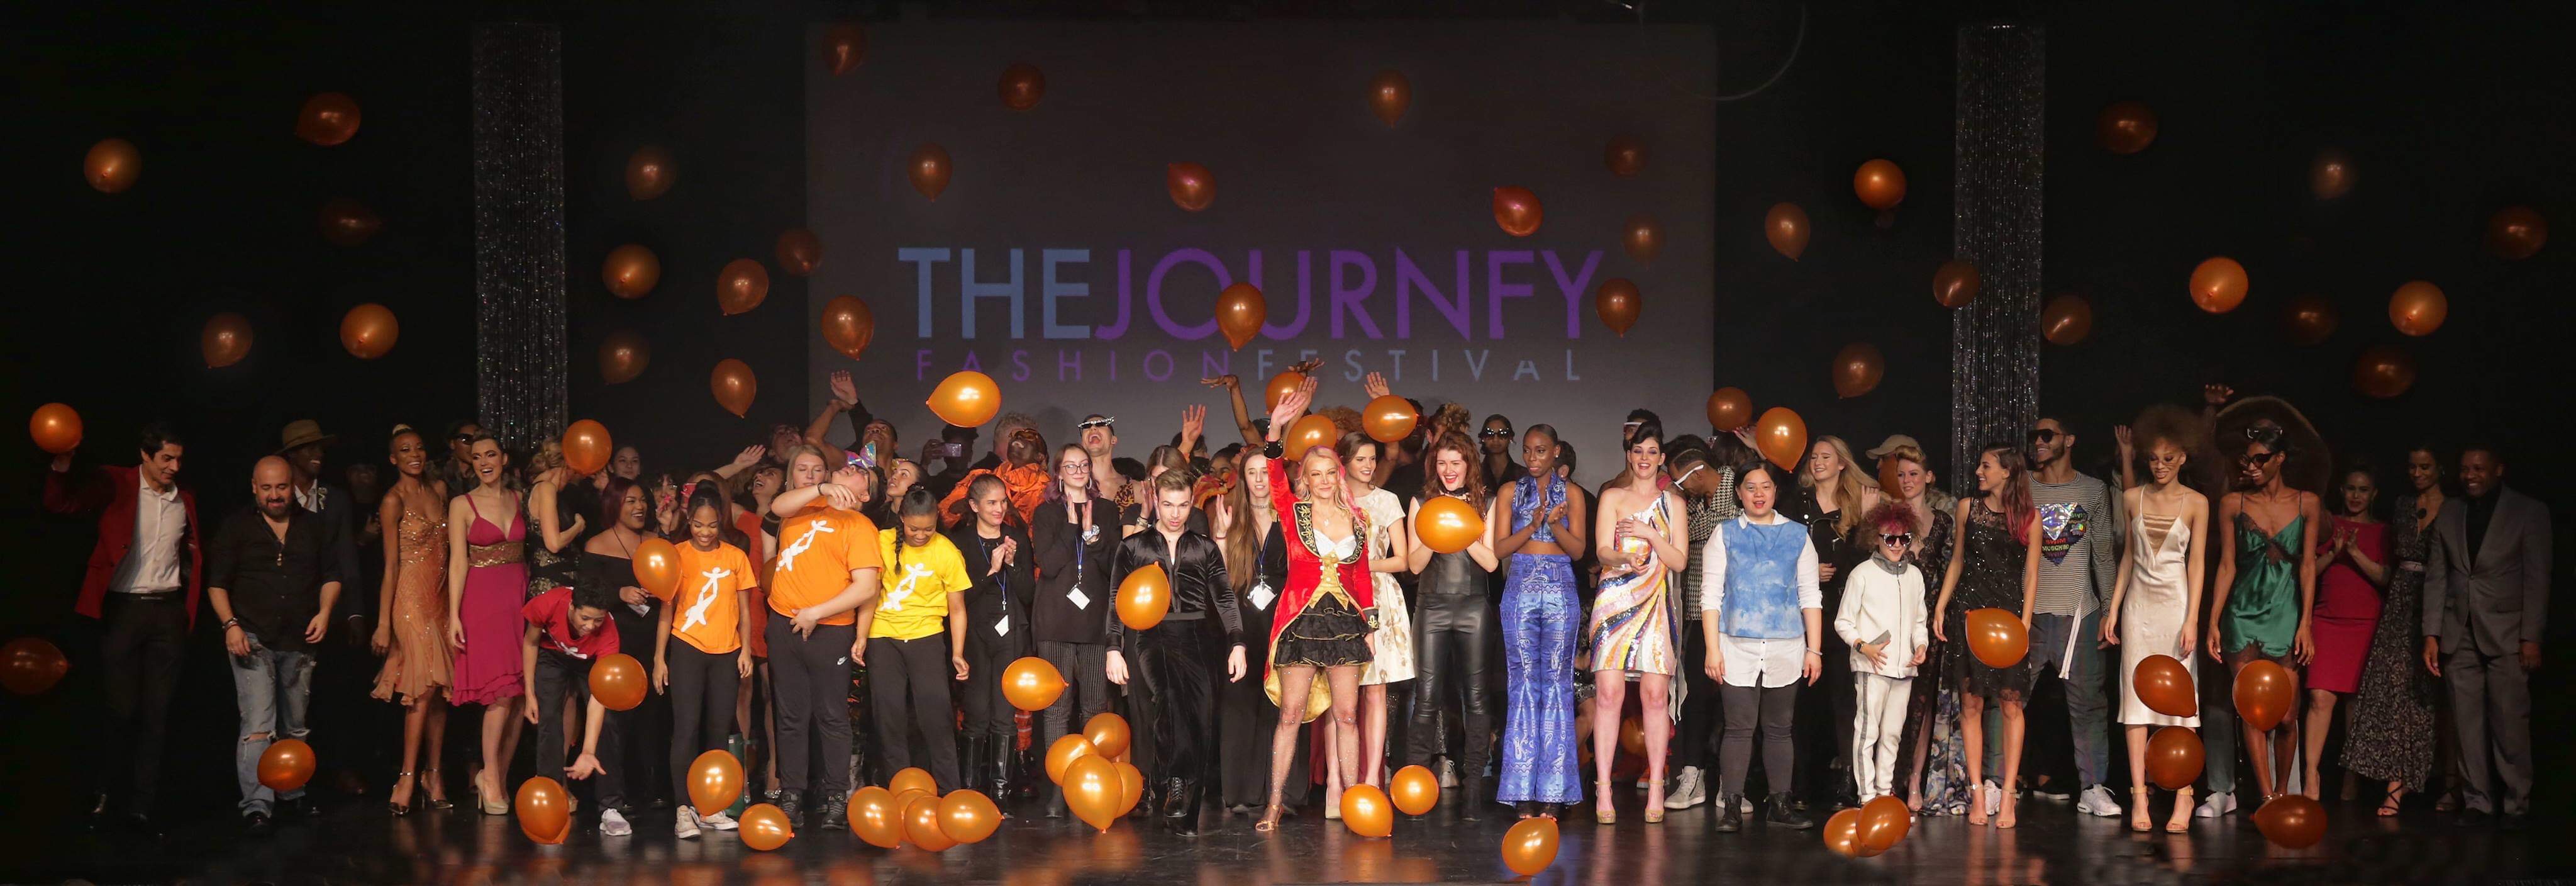 The Journey Fashion Festival cast